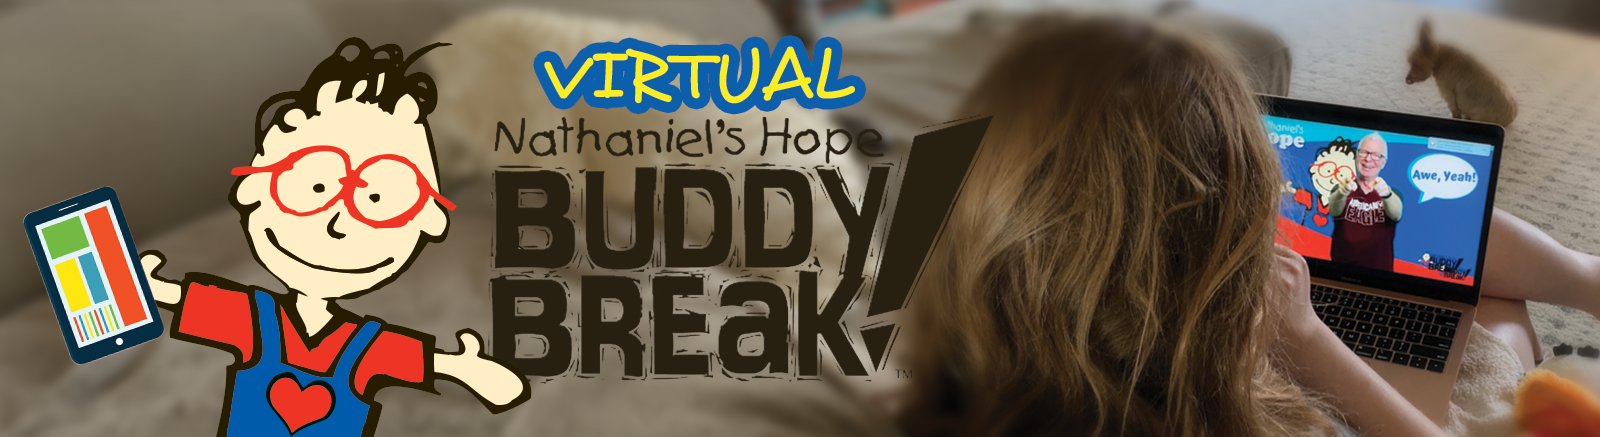 Buddy Break virtual buddy break banner